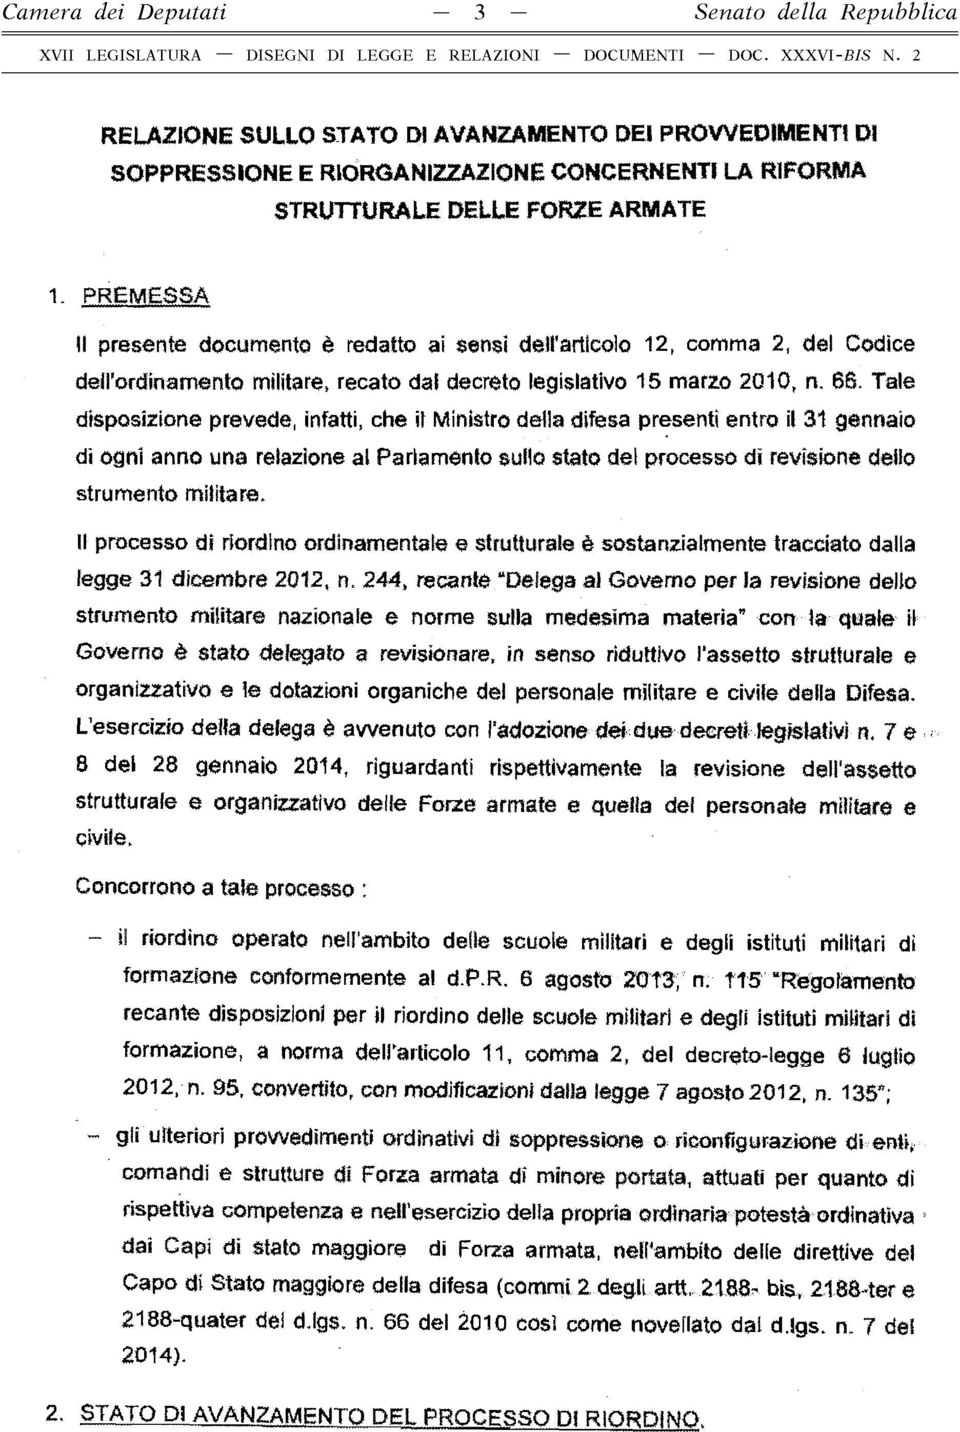 cmma, del Cdice deirrdinam ent militare, recat dal decret legislativ 15 m arz 010, n, 66.